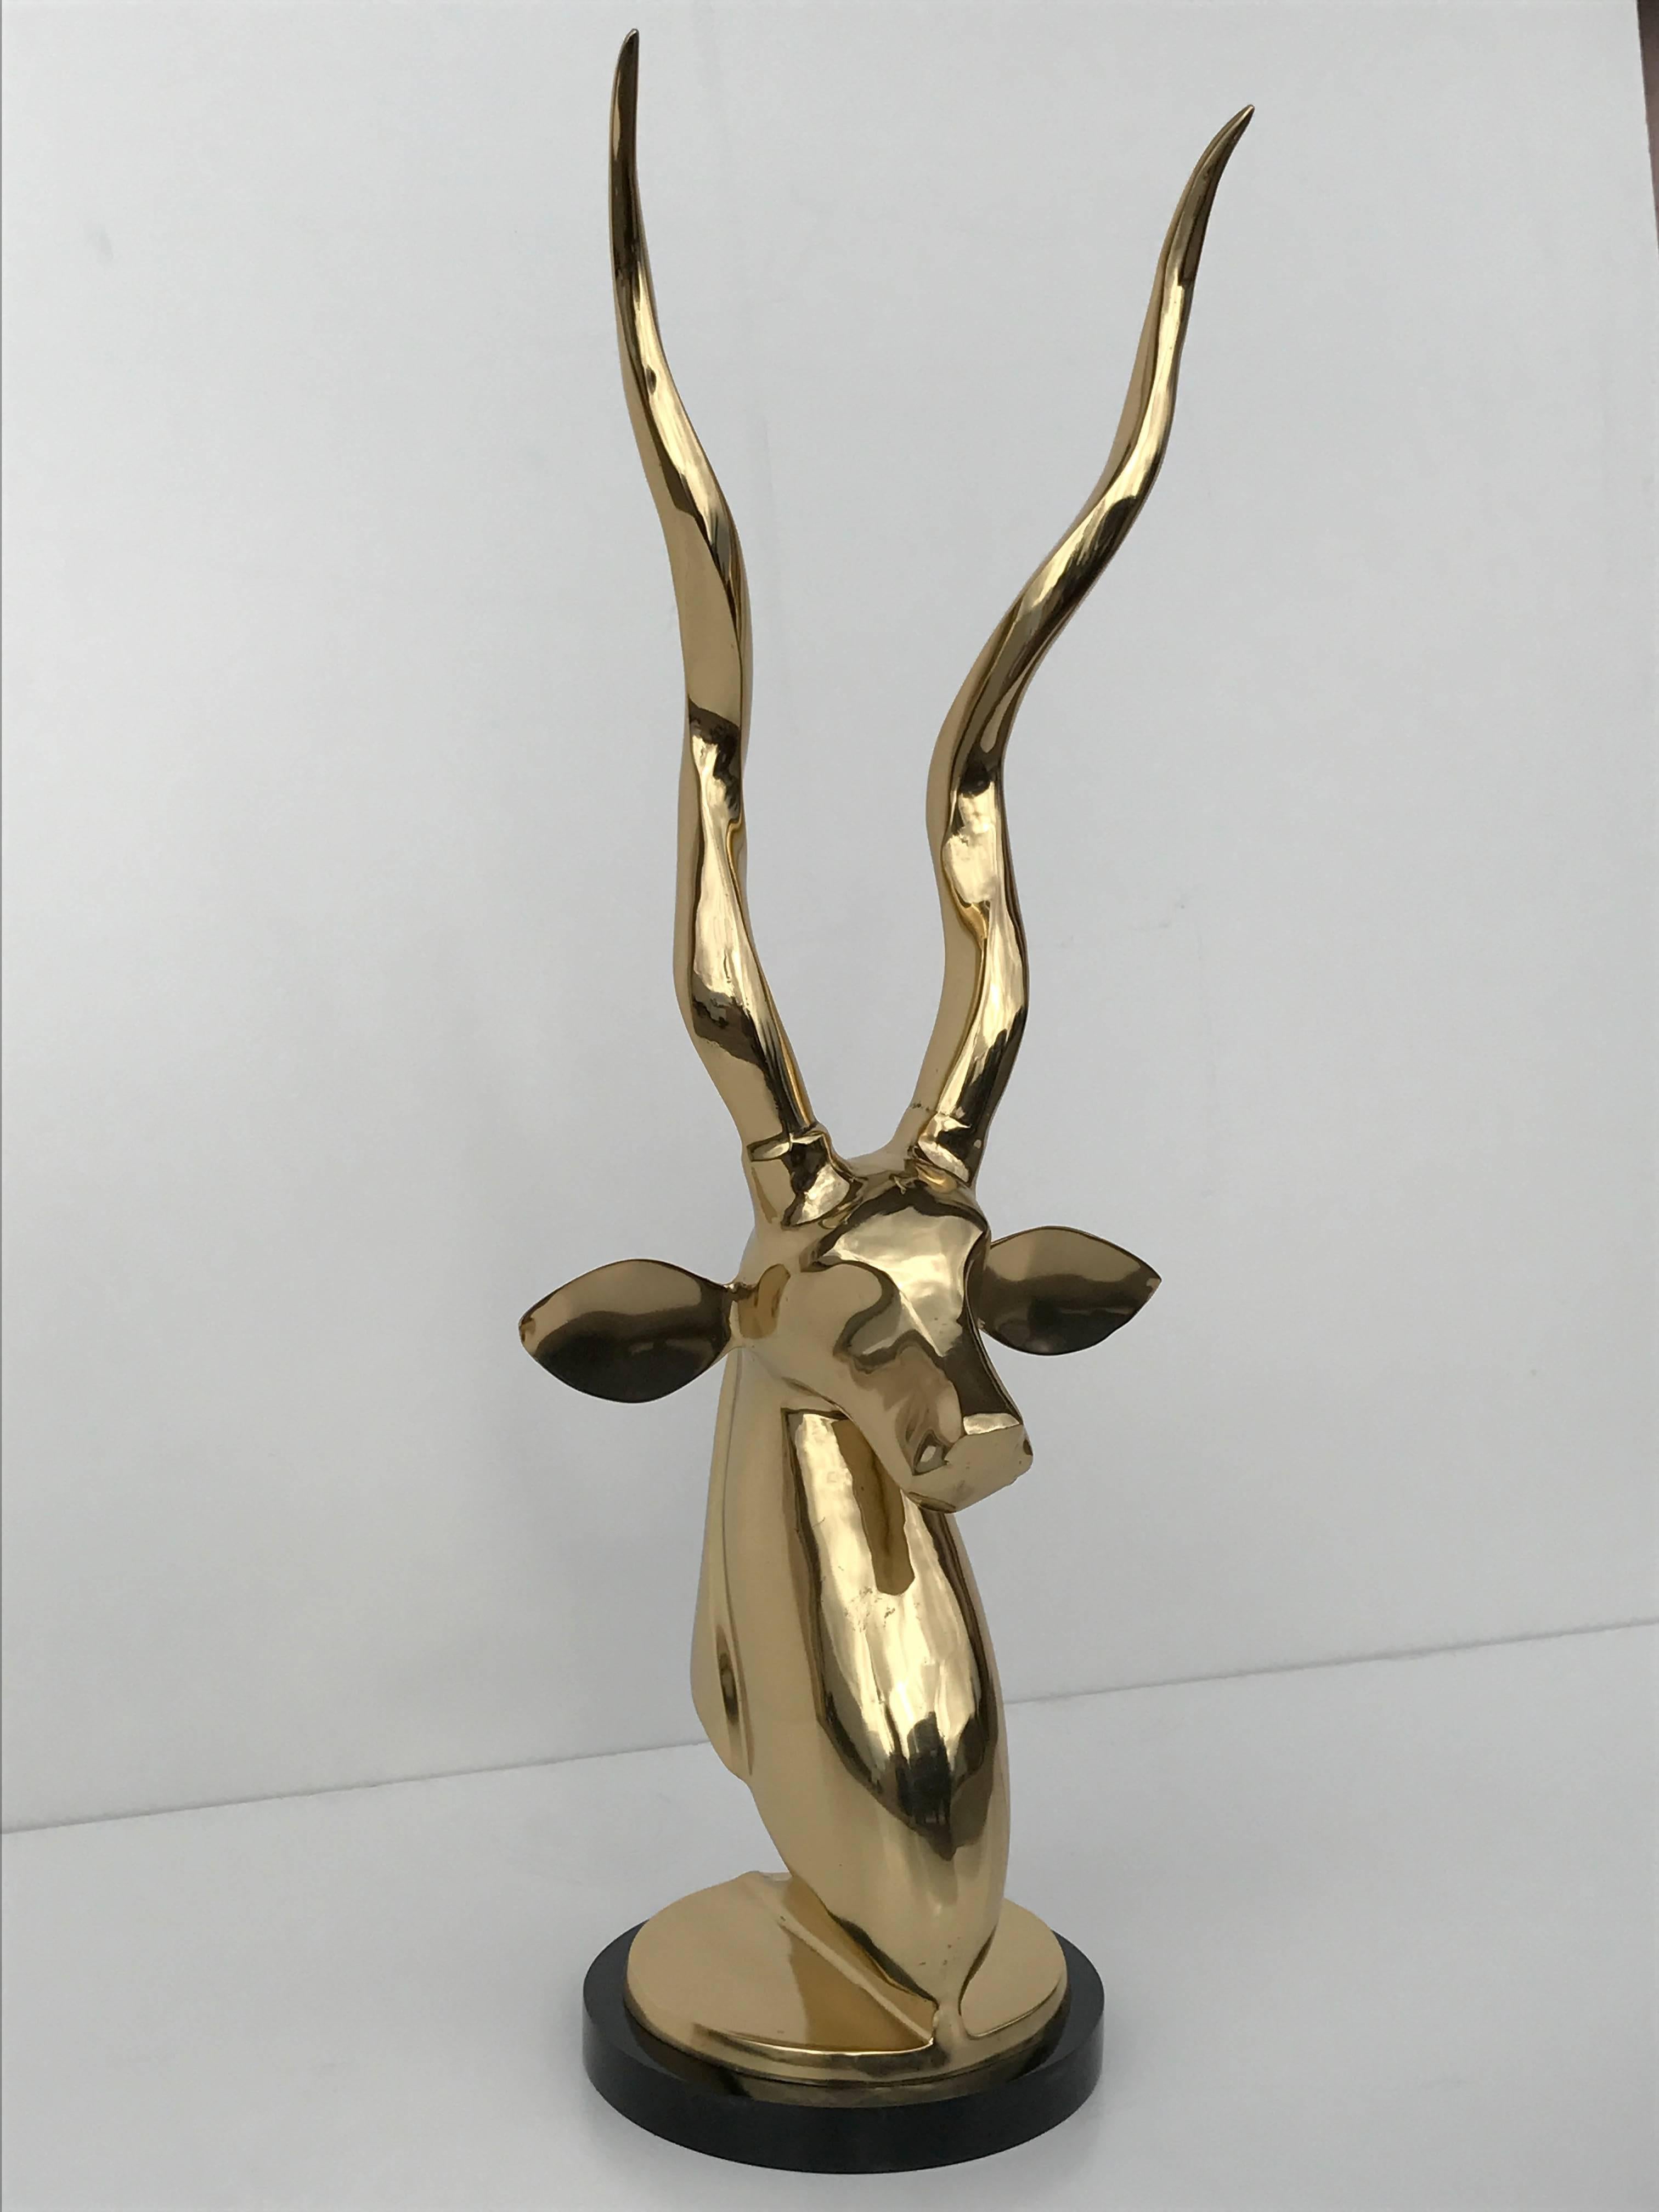 Polished brass kudu or impala sculpture bust on black Lucite base.